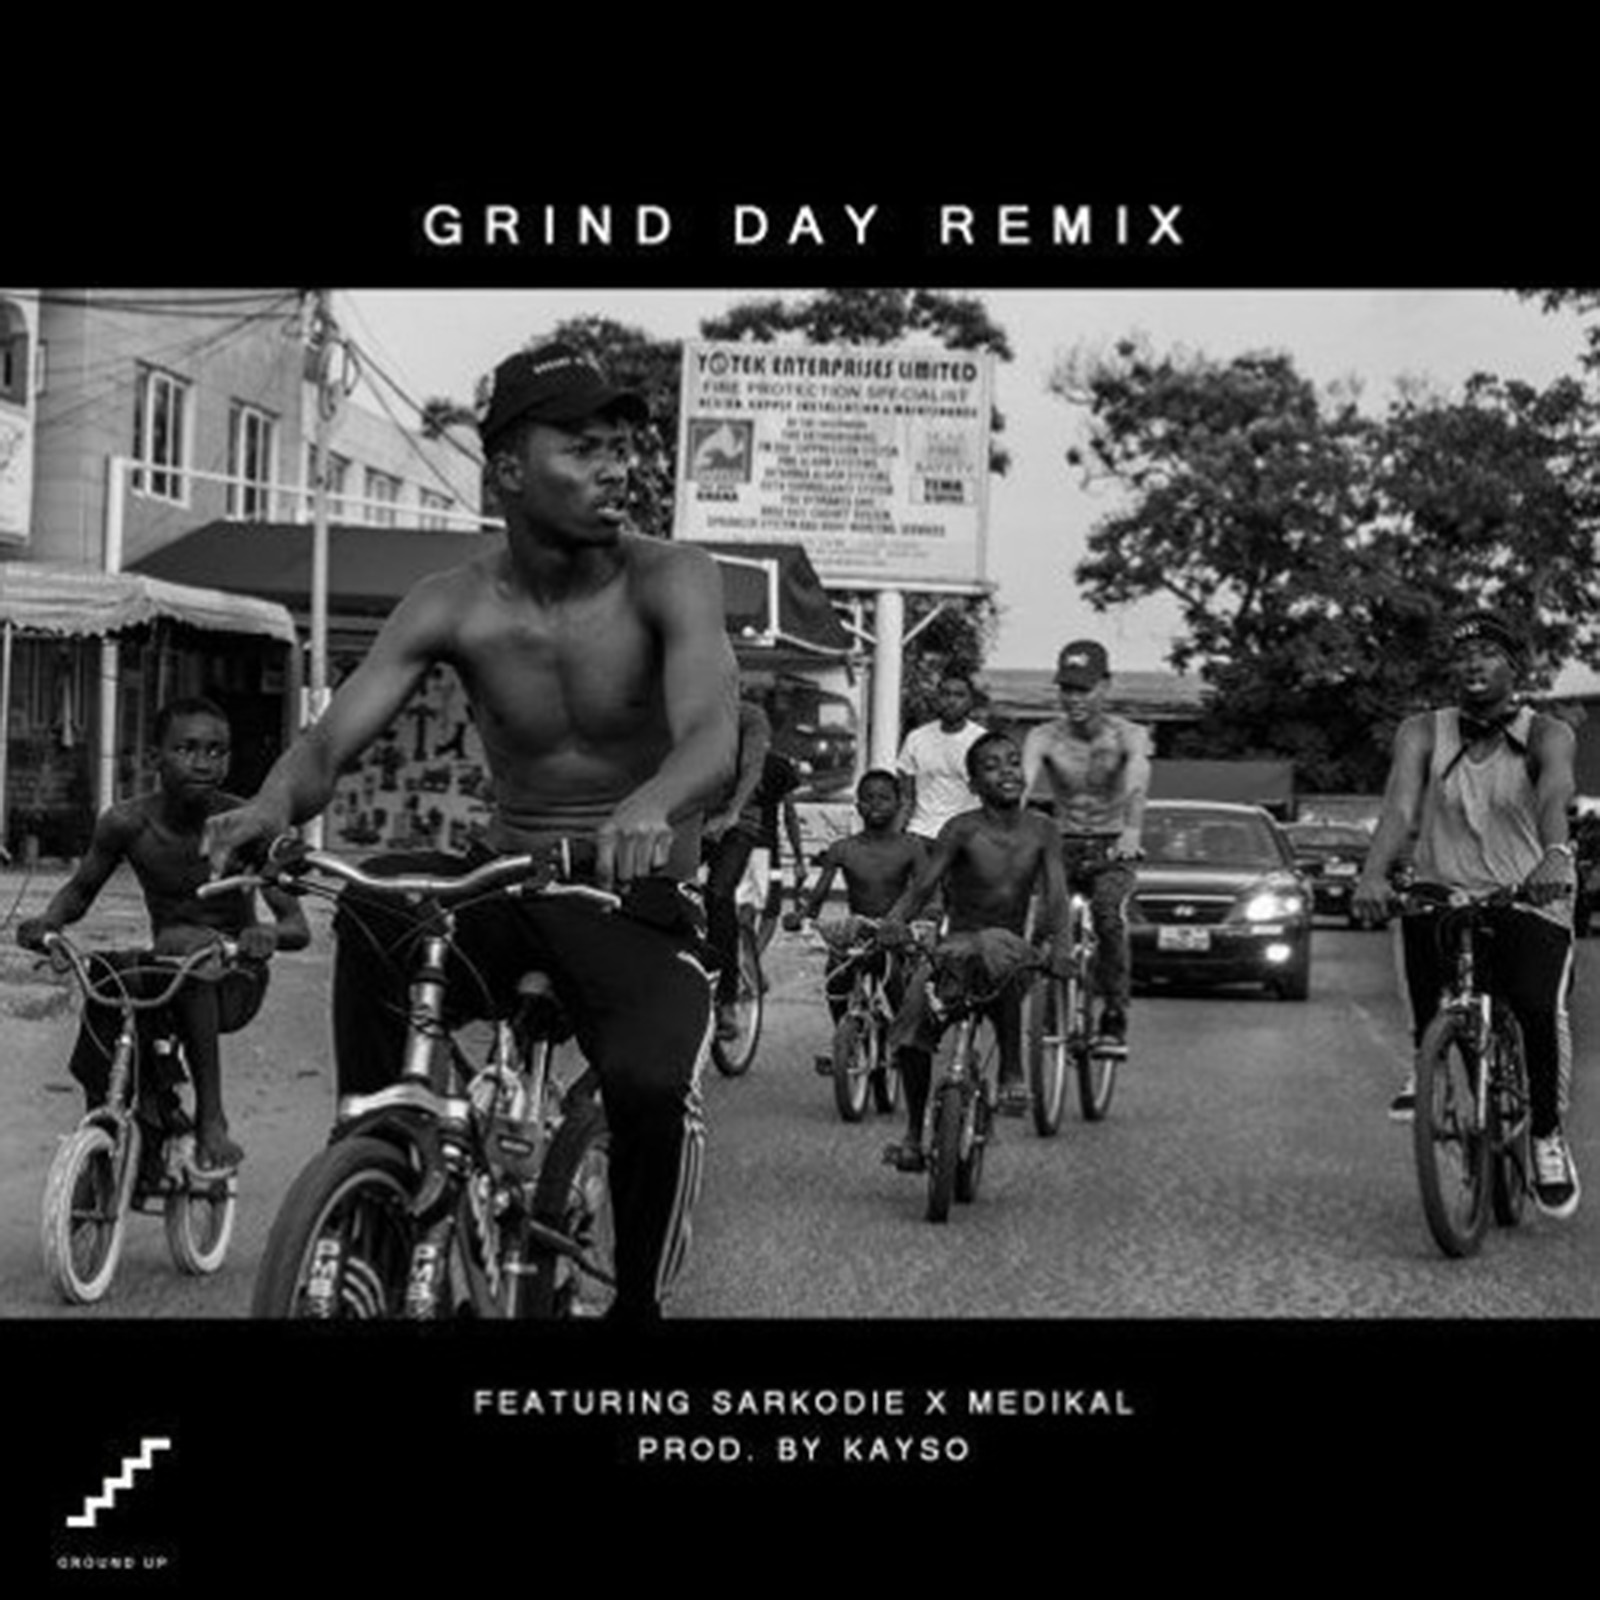 Grind Day remix by Kwesi Arthur feat. Sarkodie & Medikal